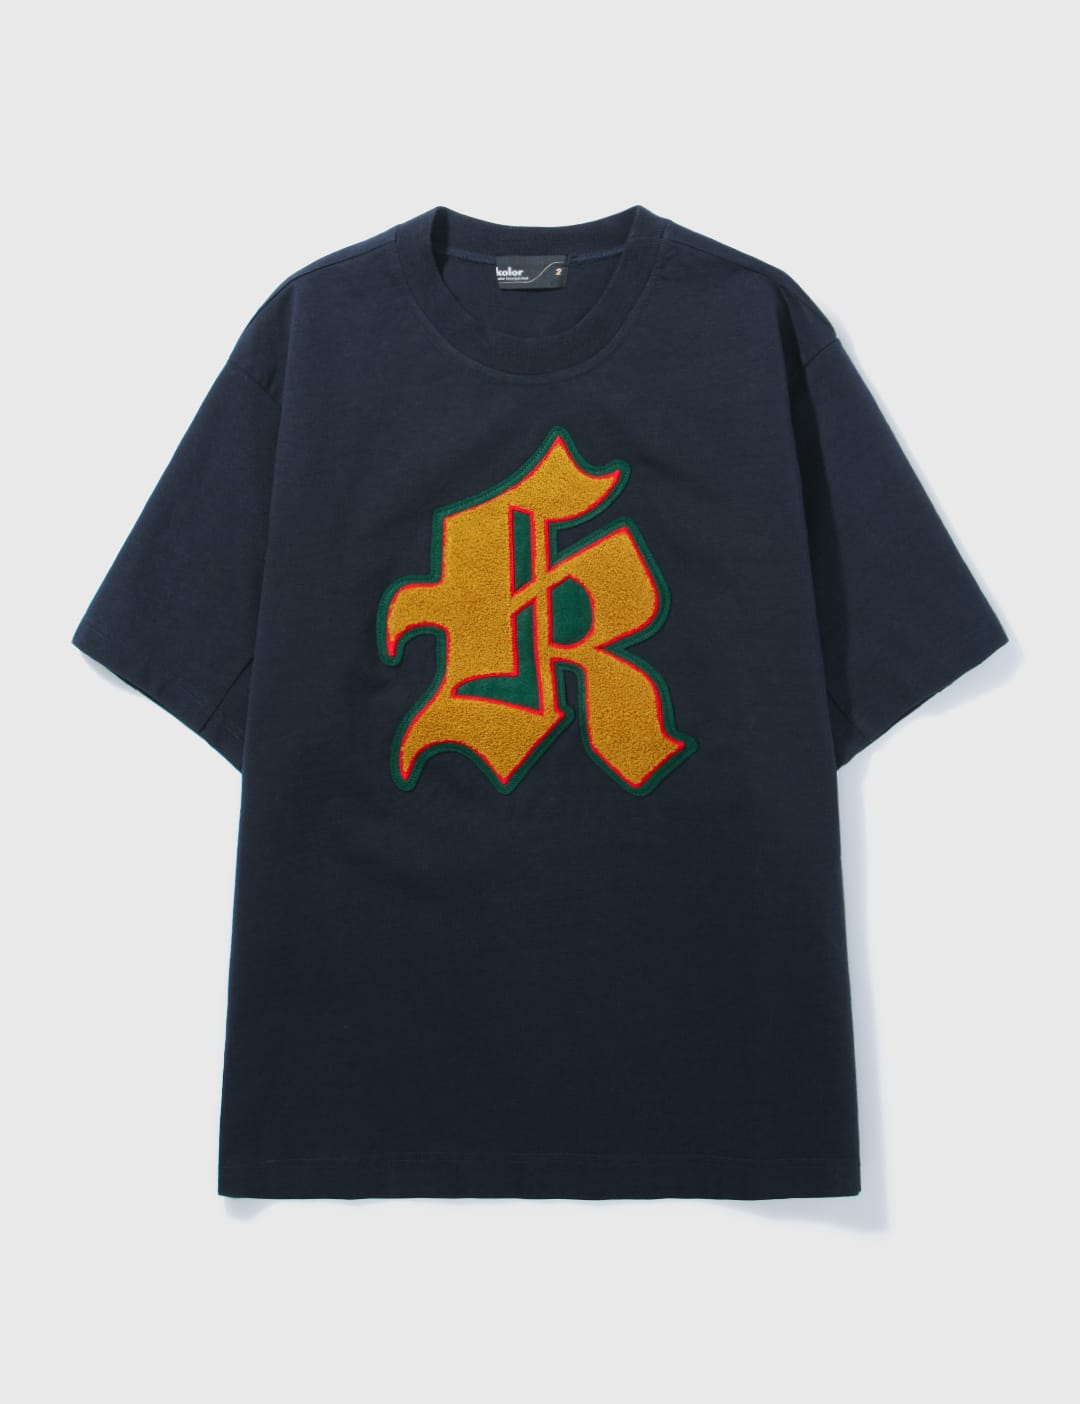 Supreme - 20TH ANNIVERSARY BOX LOGO T-shirt | HBX - Globally 